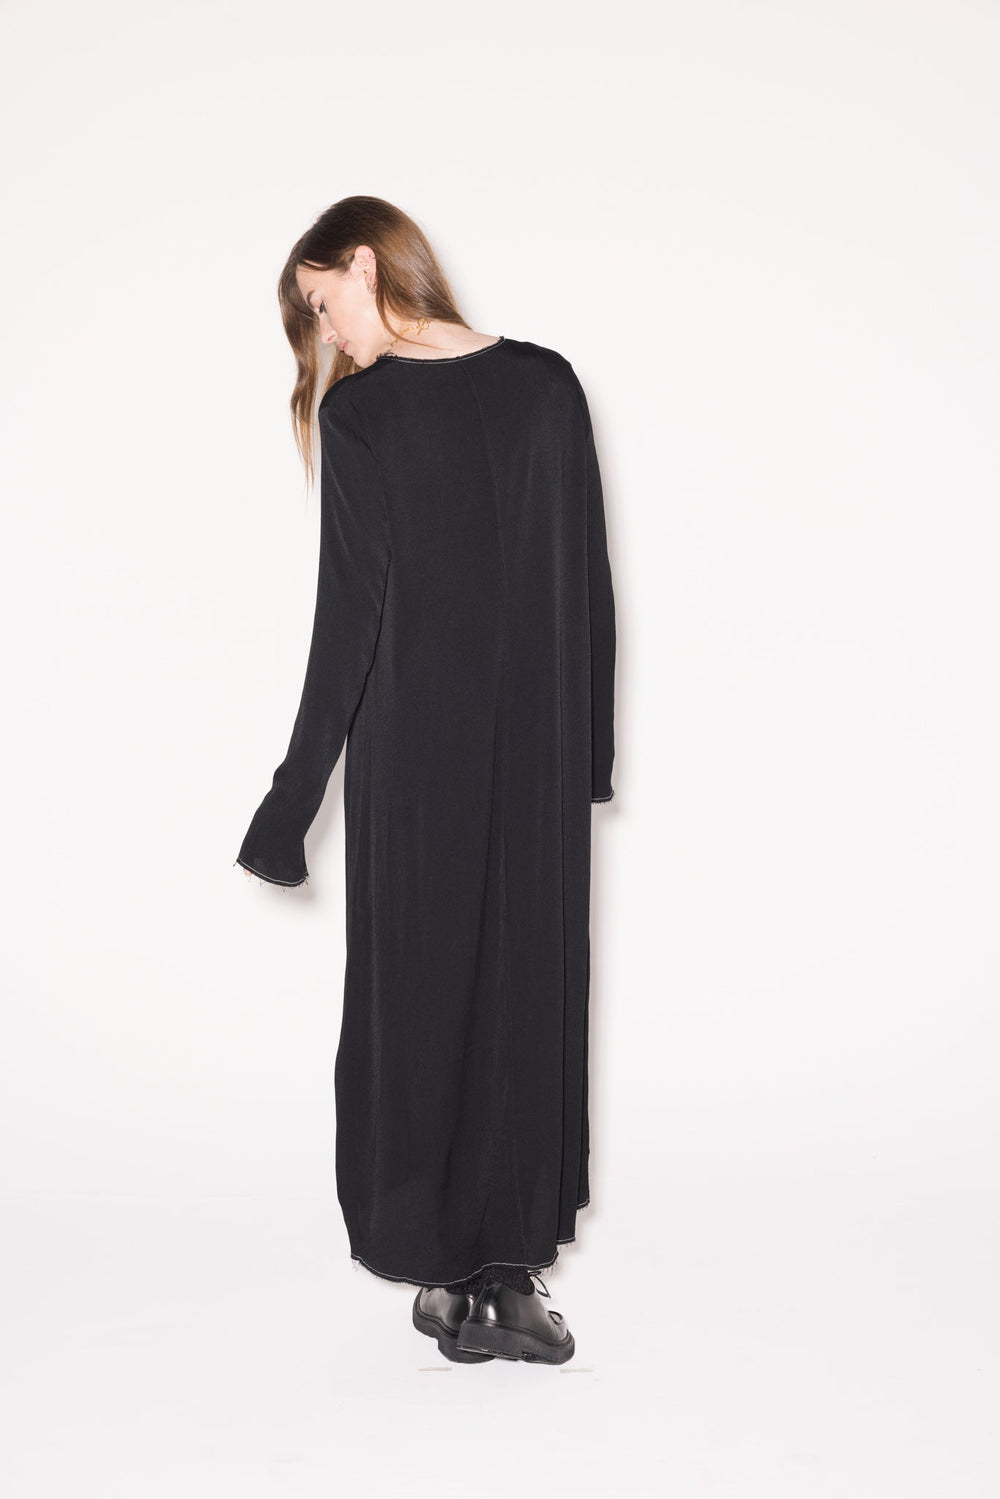 Yin Dress - Black - Chillis & More NZ